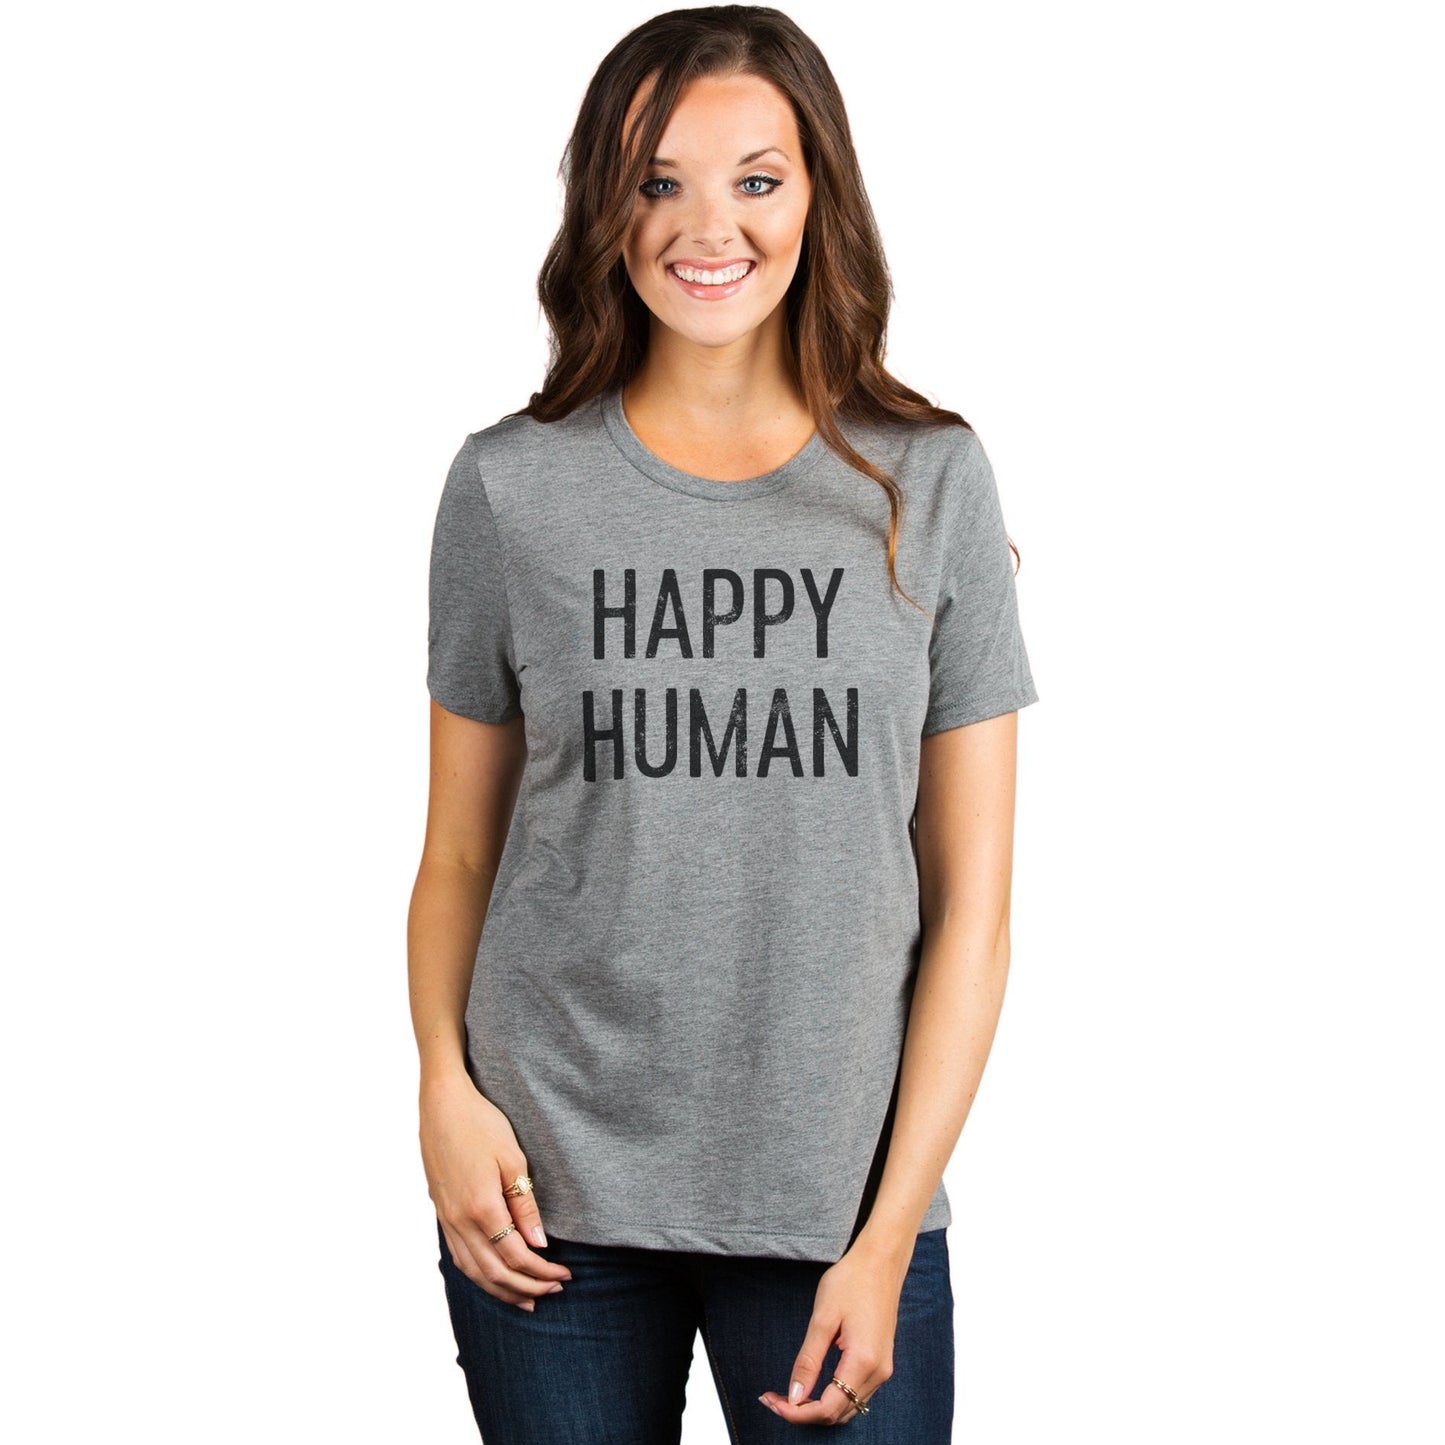 Happy Human Women's Relaxed Crewneck T-Shirt Top Tee Heather Grey Model
